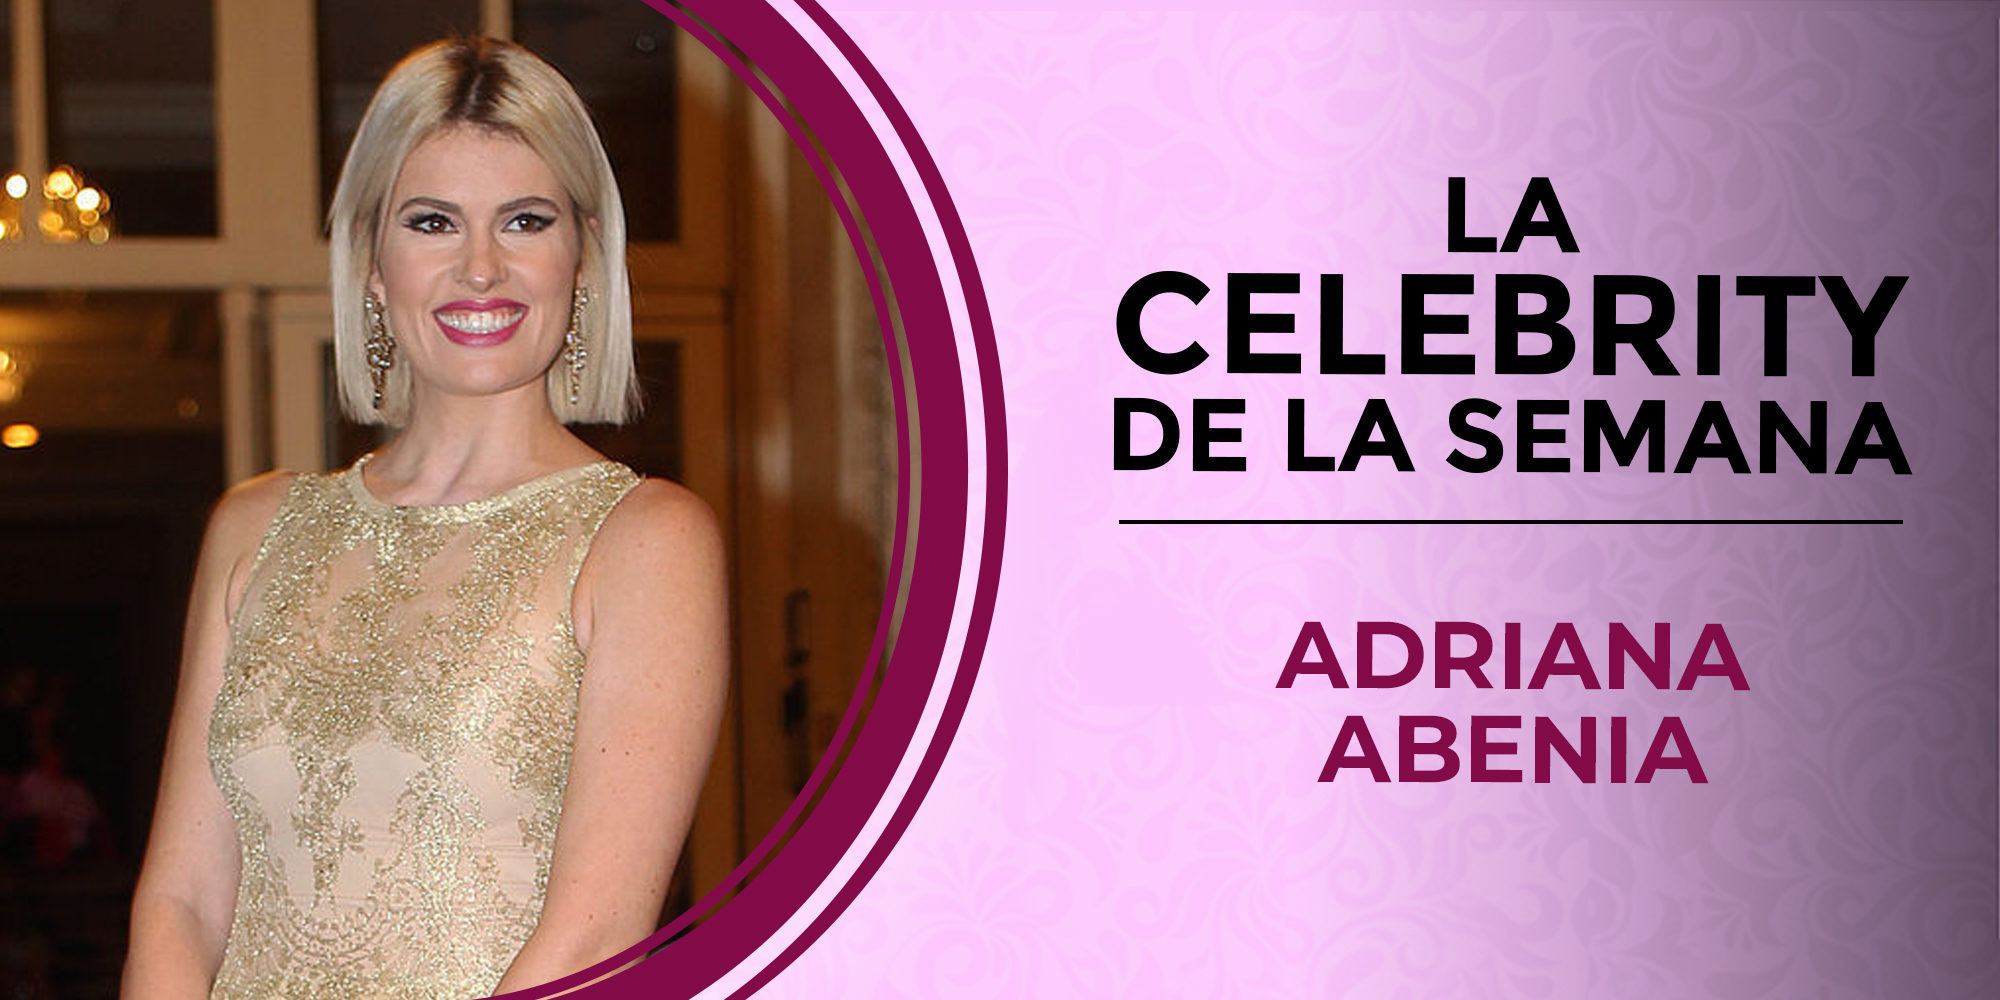 Adriana Abenia se convierte en la celebrity de la semana por su embarazo